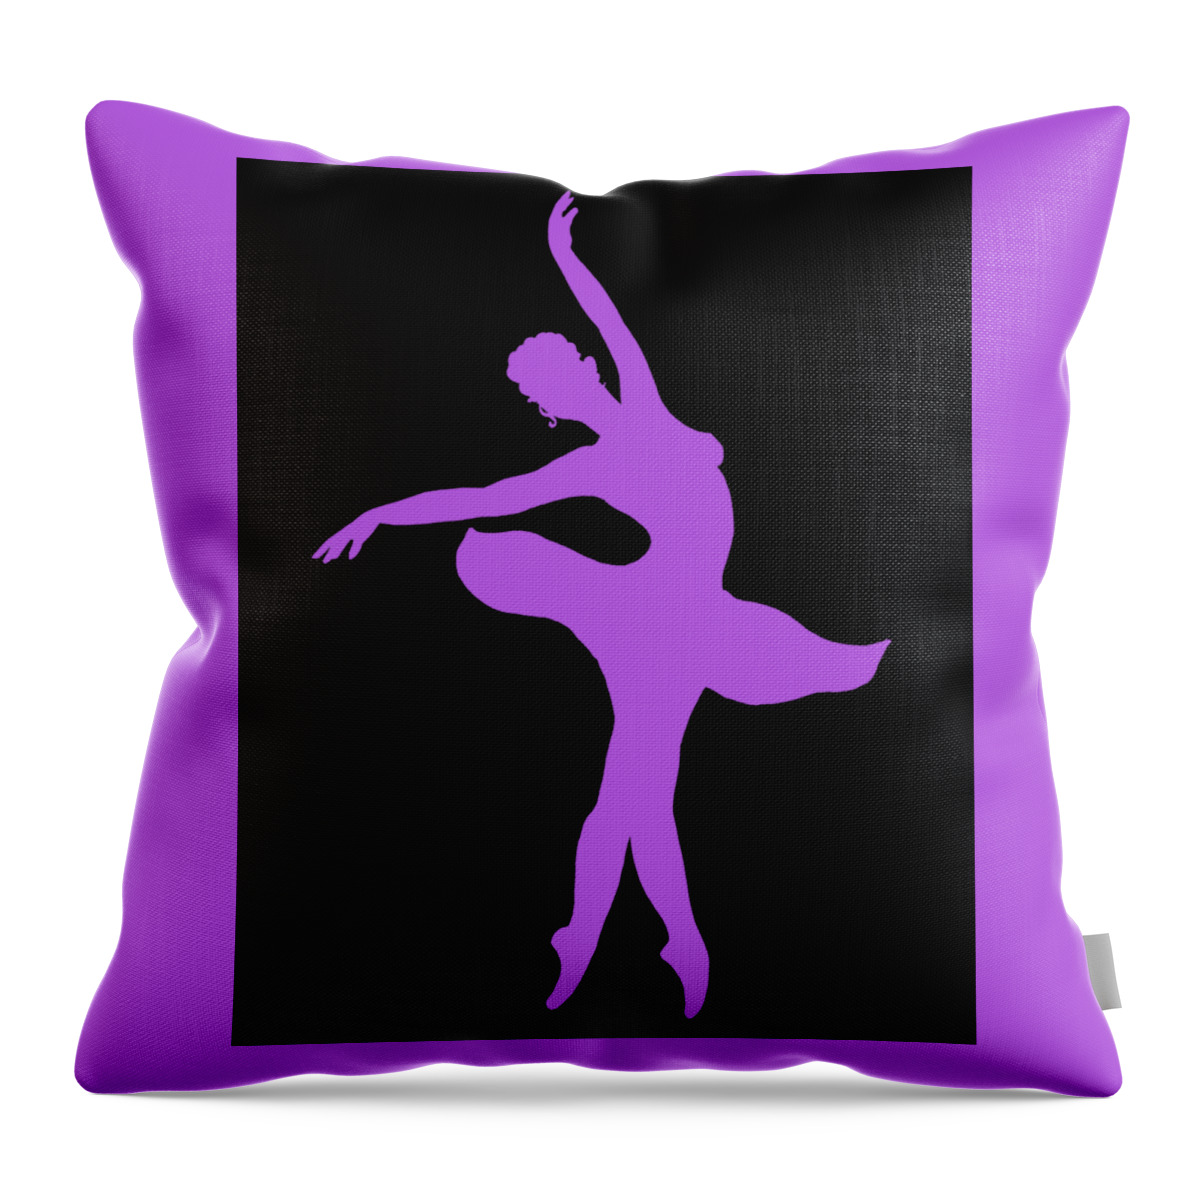 Ballerina Throw Pillow featuring the painting Dancing Ballerina White Silhouette by Irina Sztukowski